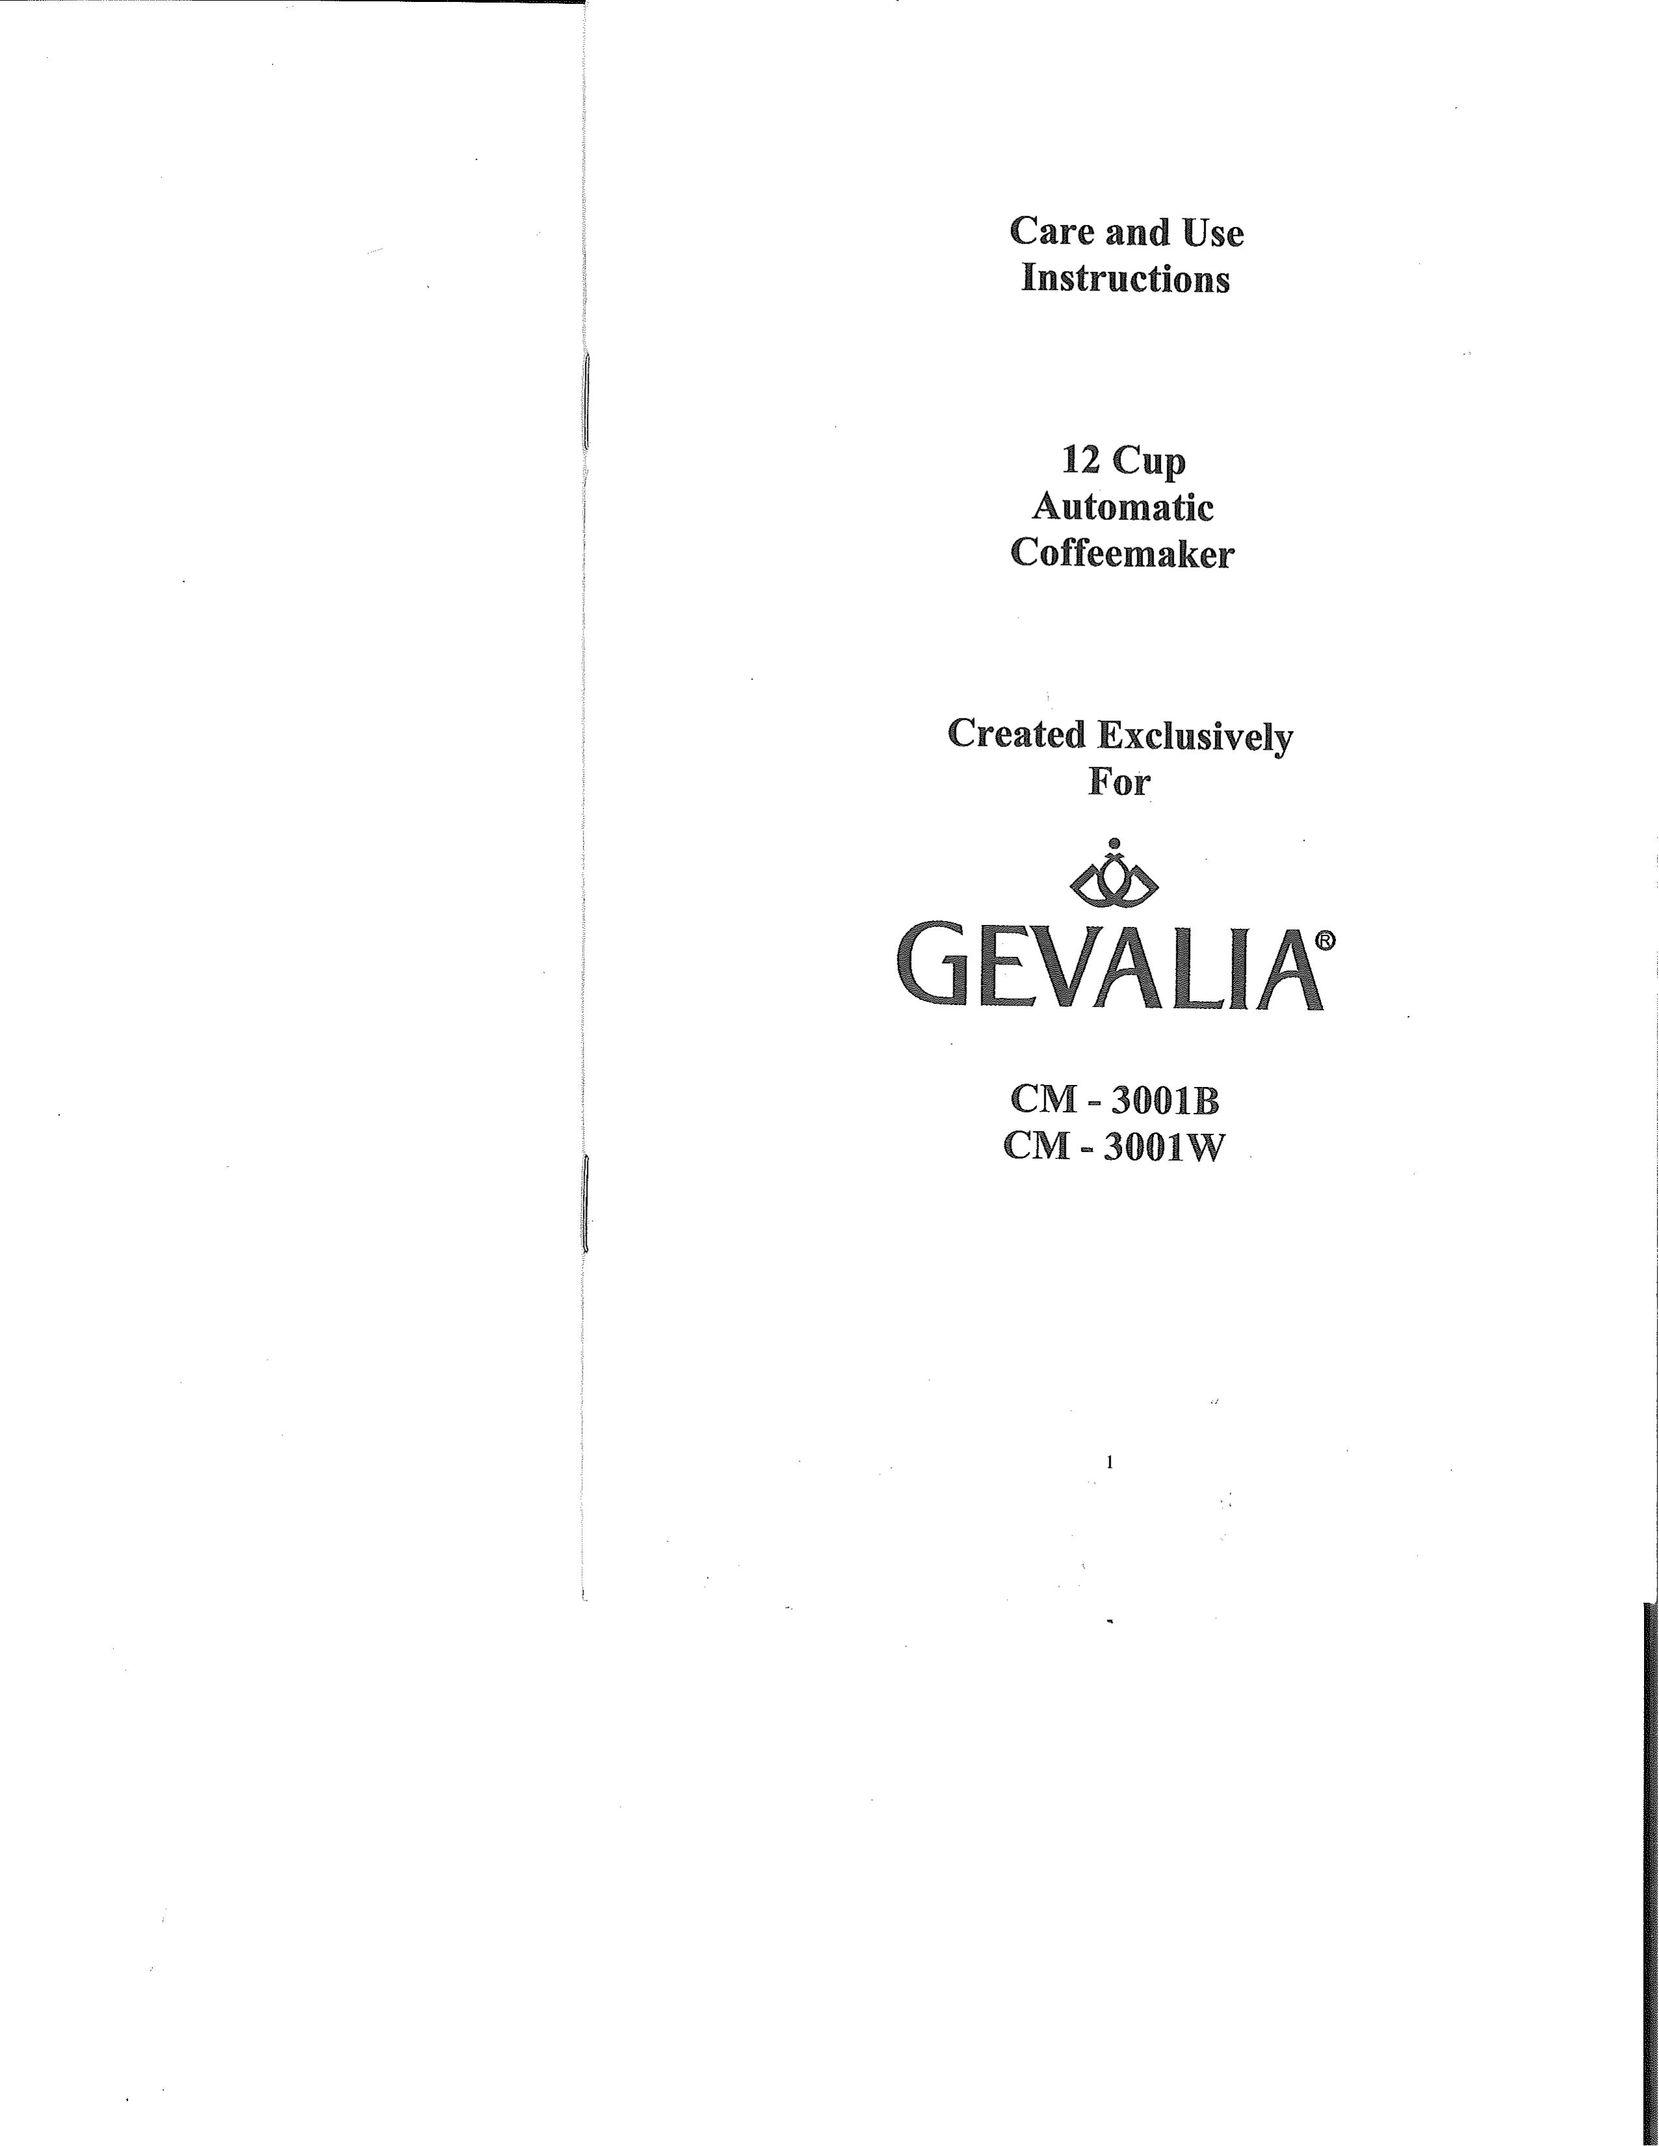 Gevalia CM-3001B Coffeemaker User Manual